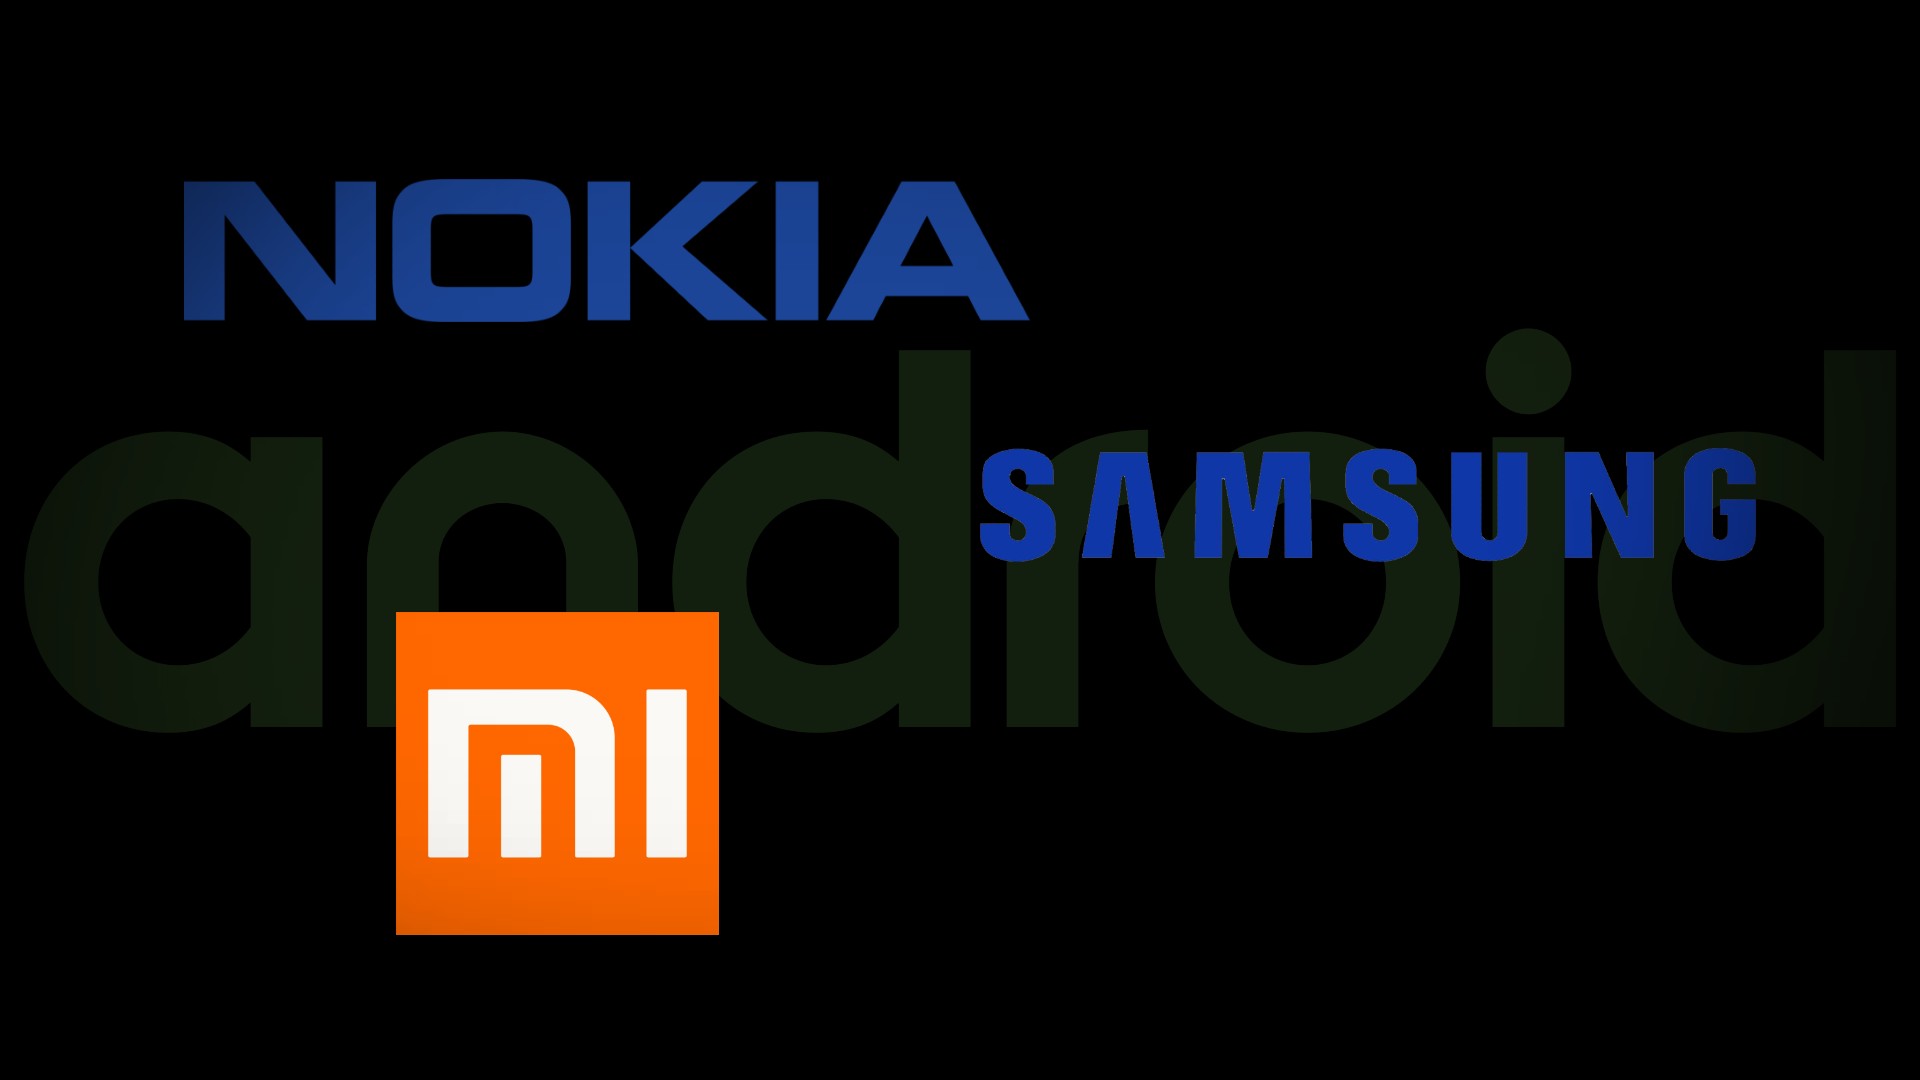 Samsung Nokia Xiaomi Android